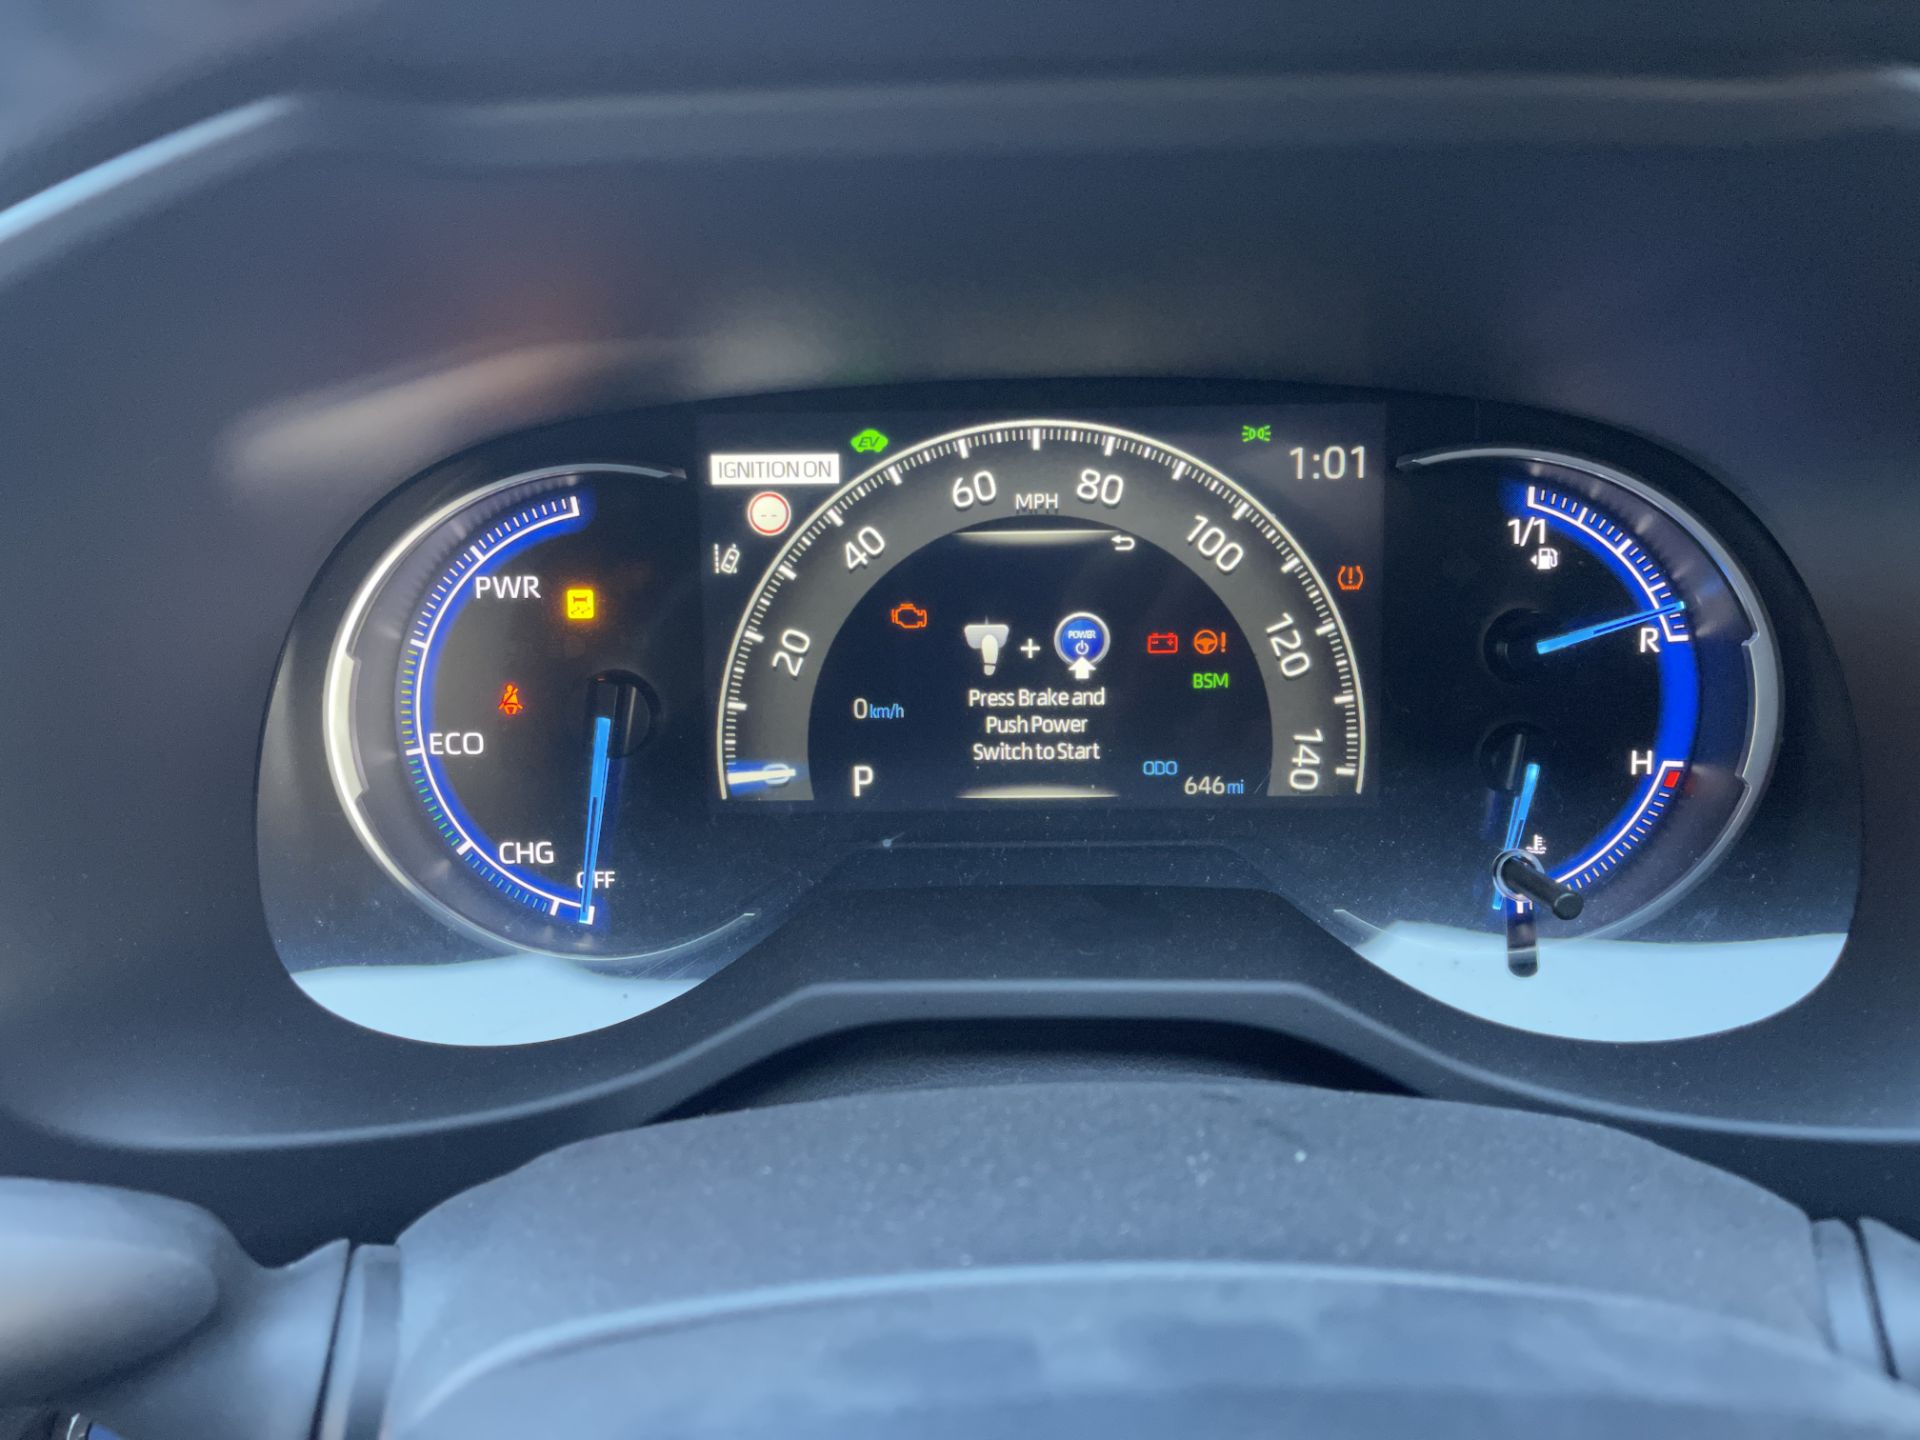 2019 - Toyota RAV 4 Dynamic HEV 4 x 2 CVT 2,487cc Petrol Hybrid Electric SUV, - Image 15 of 46